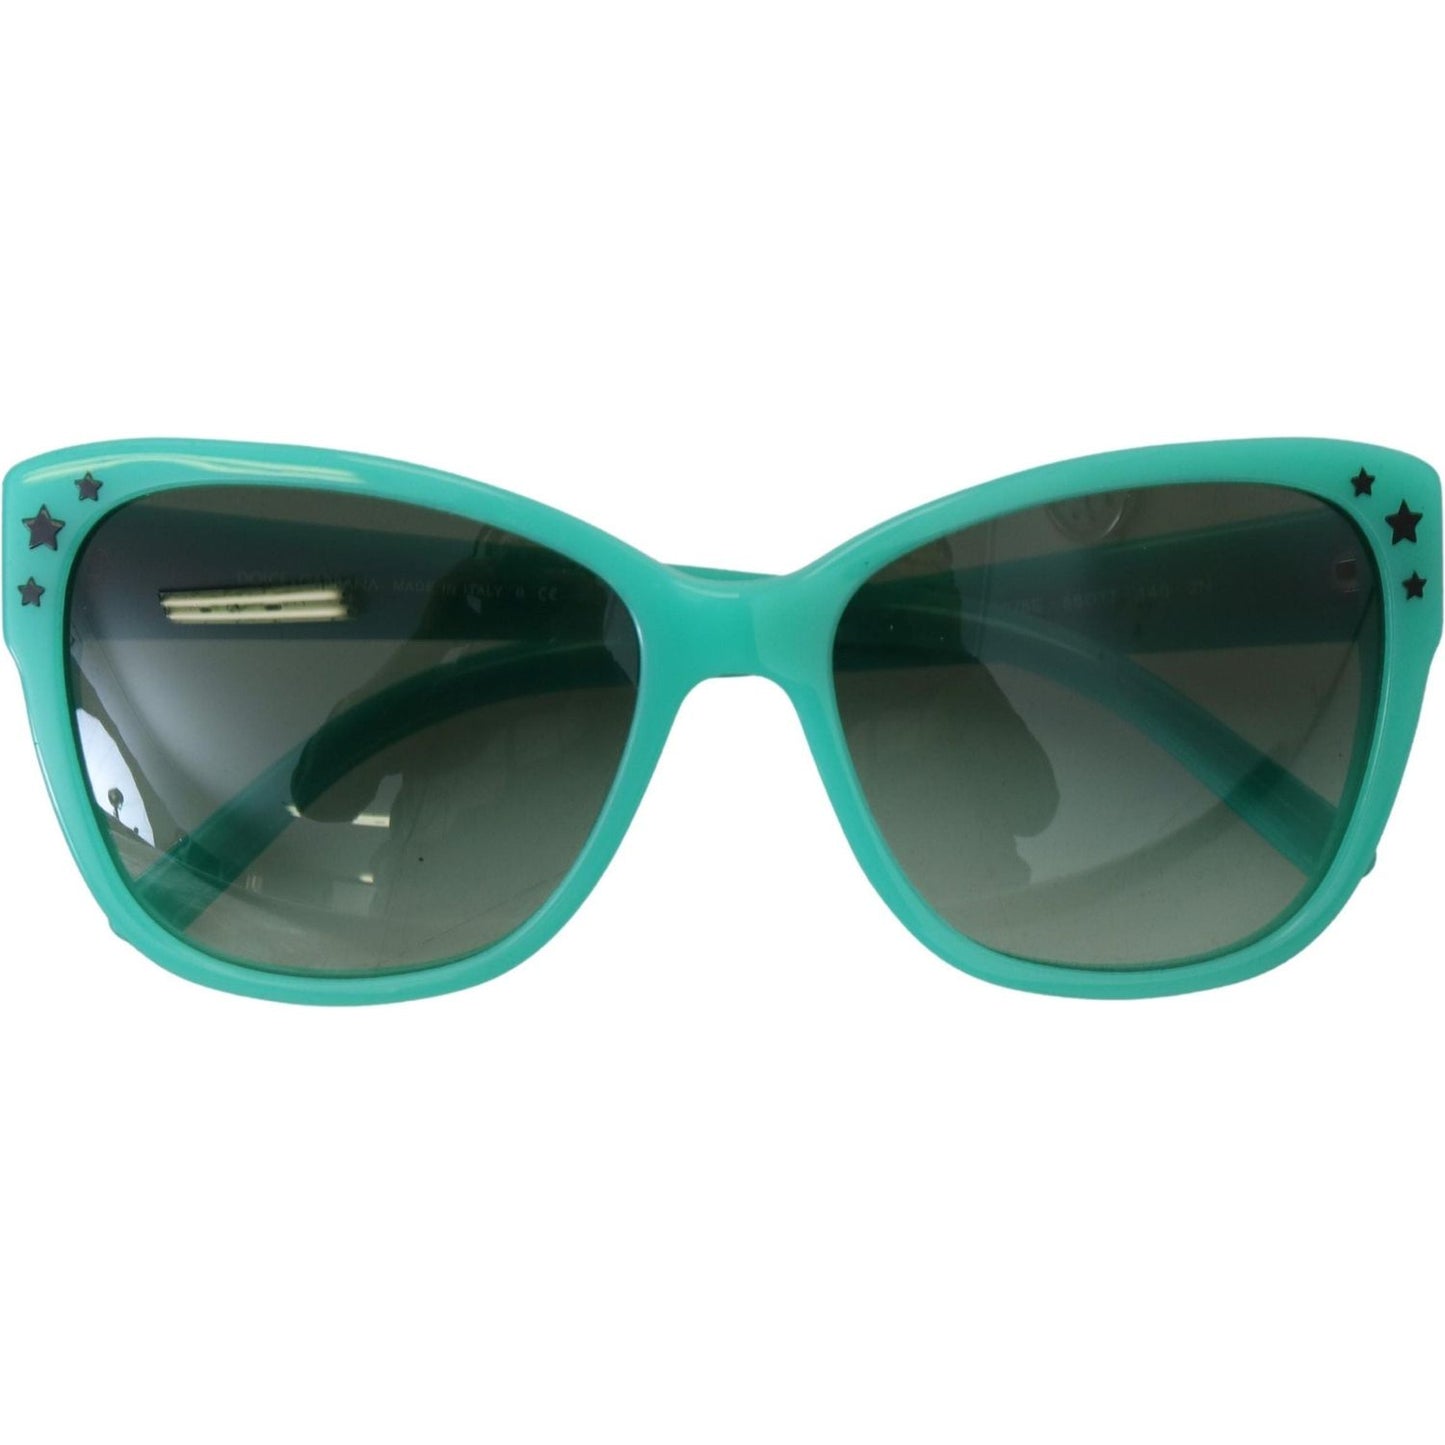 Dolce & Gabbana Enigmatic Star-Patterned Square Sunglasses green-stars-acetate-square-shades-dg4124-sunglasses IMG_4018-scaled-5df9e567-b77.jpg